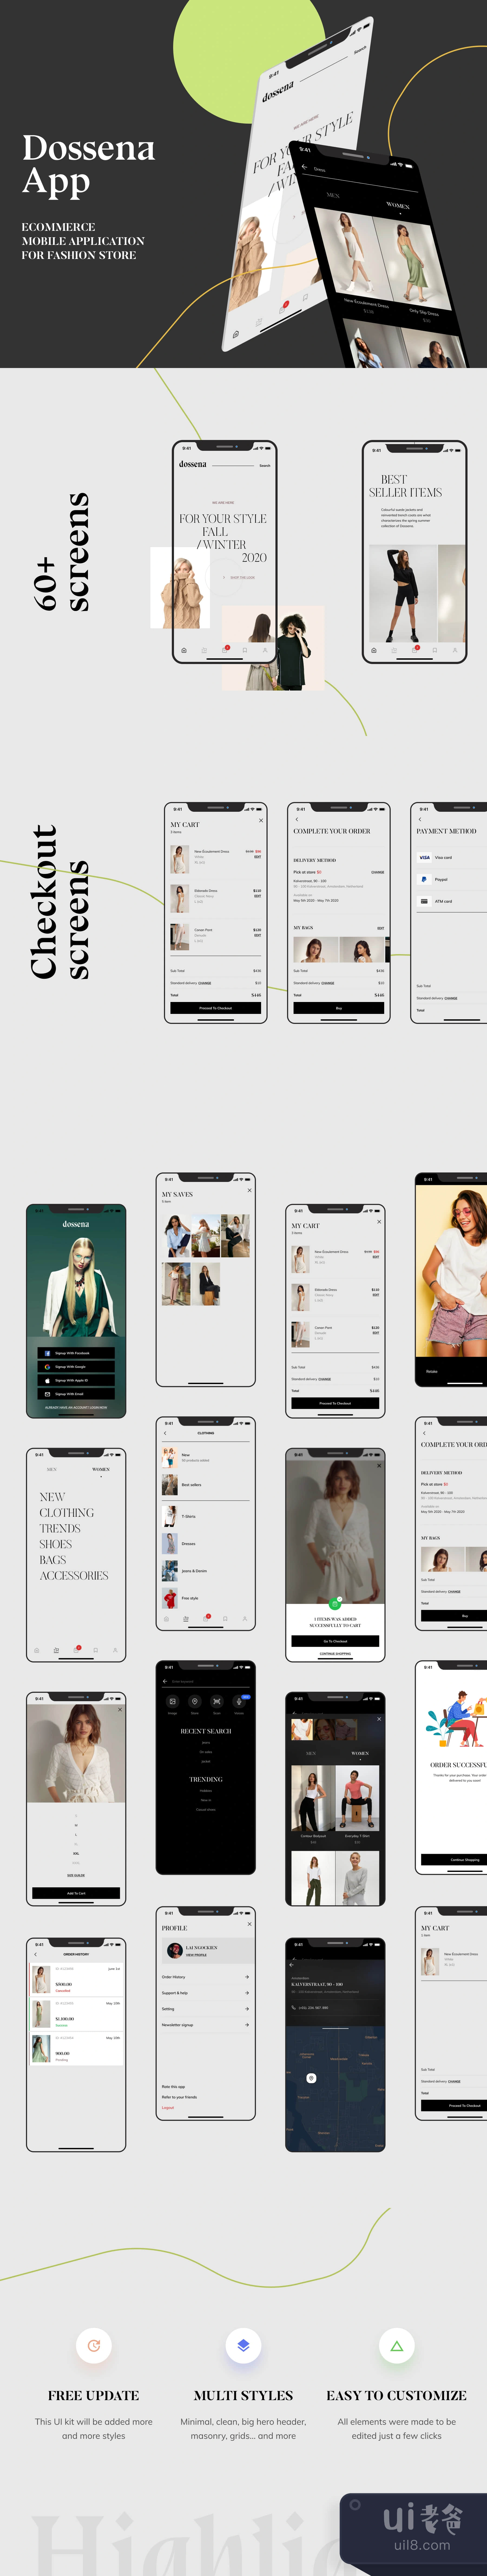 Dossena - 时尚服装购物App设计插图1